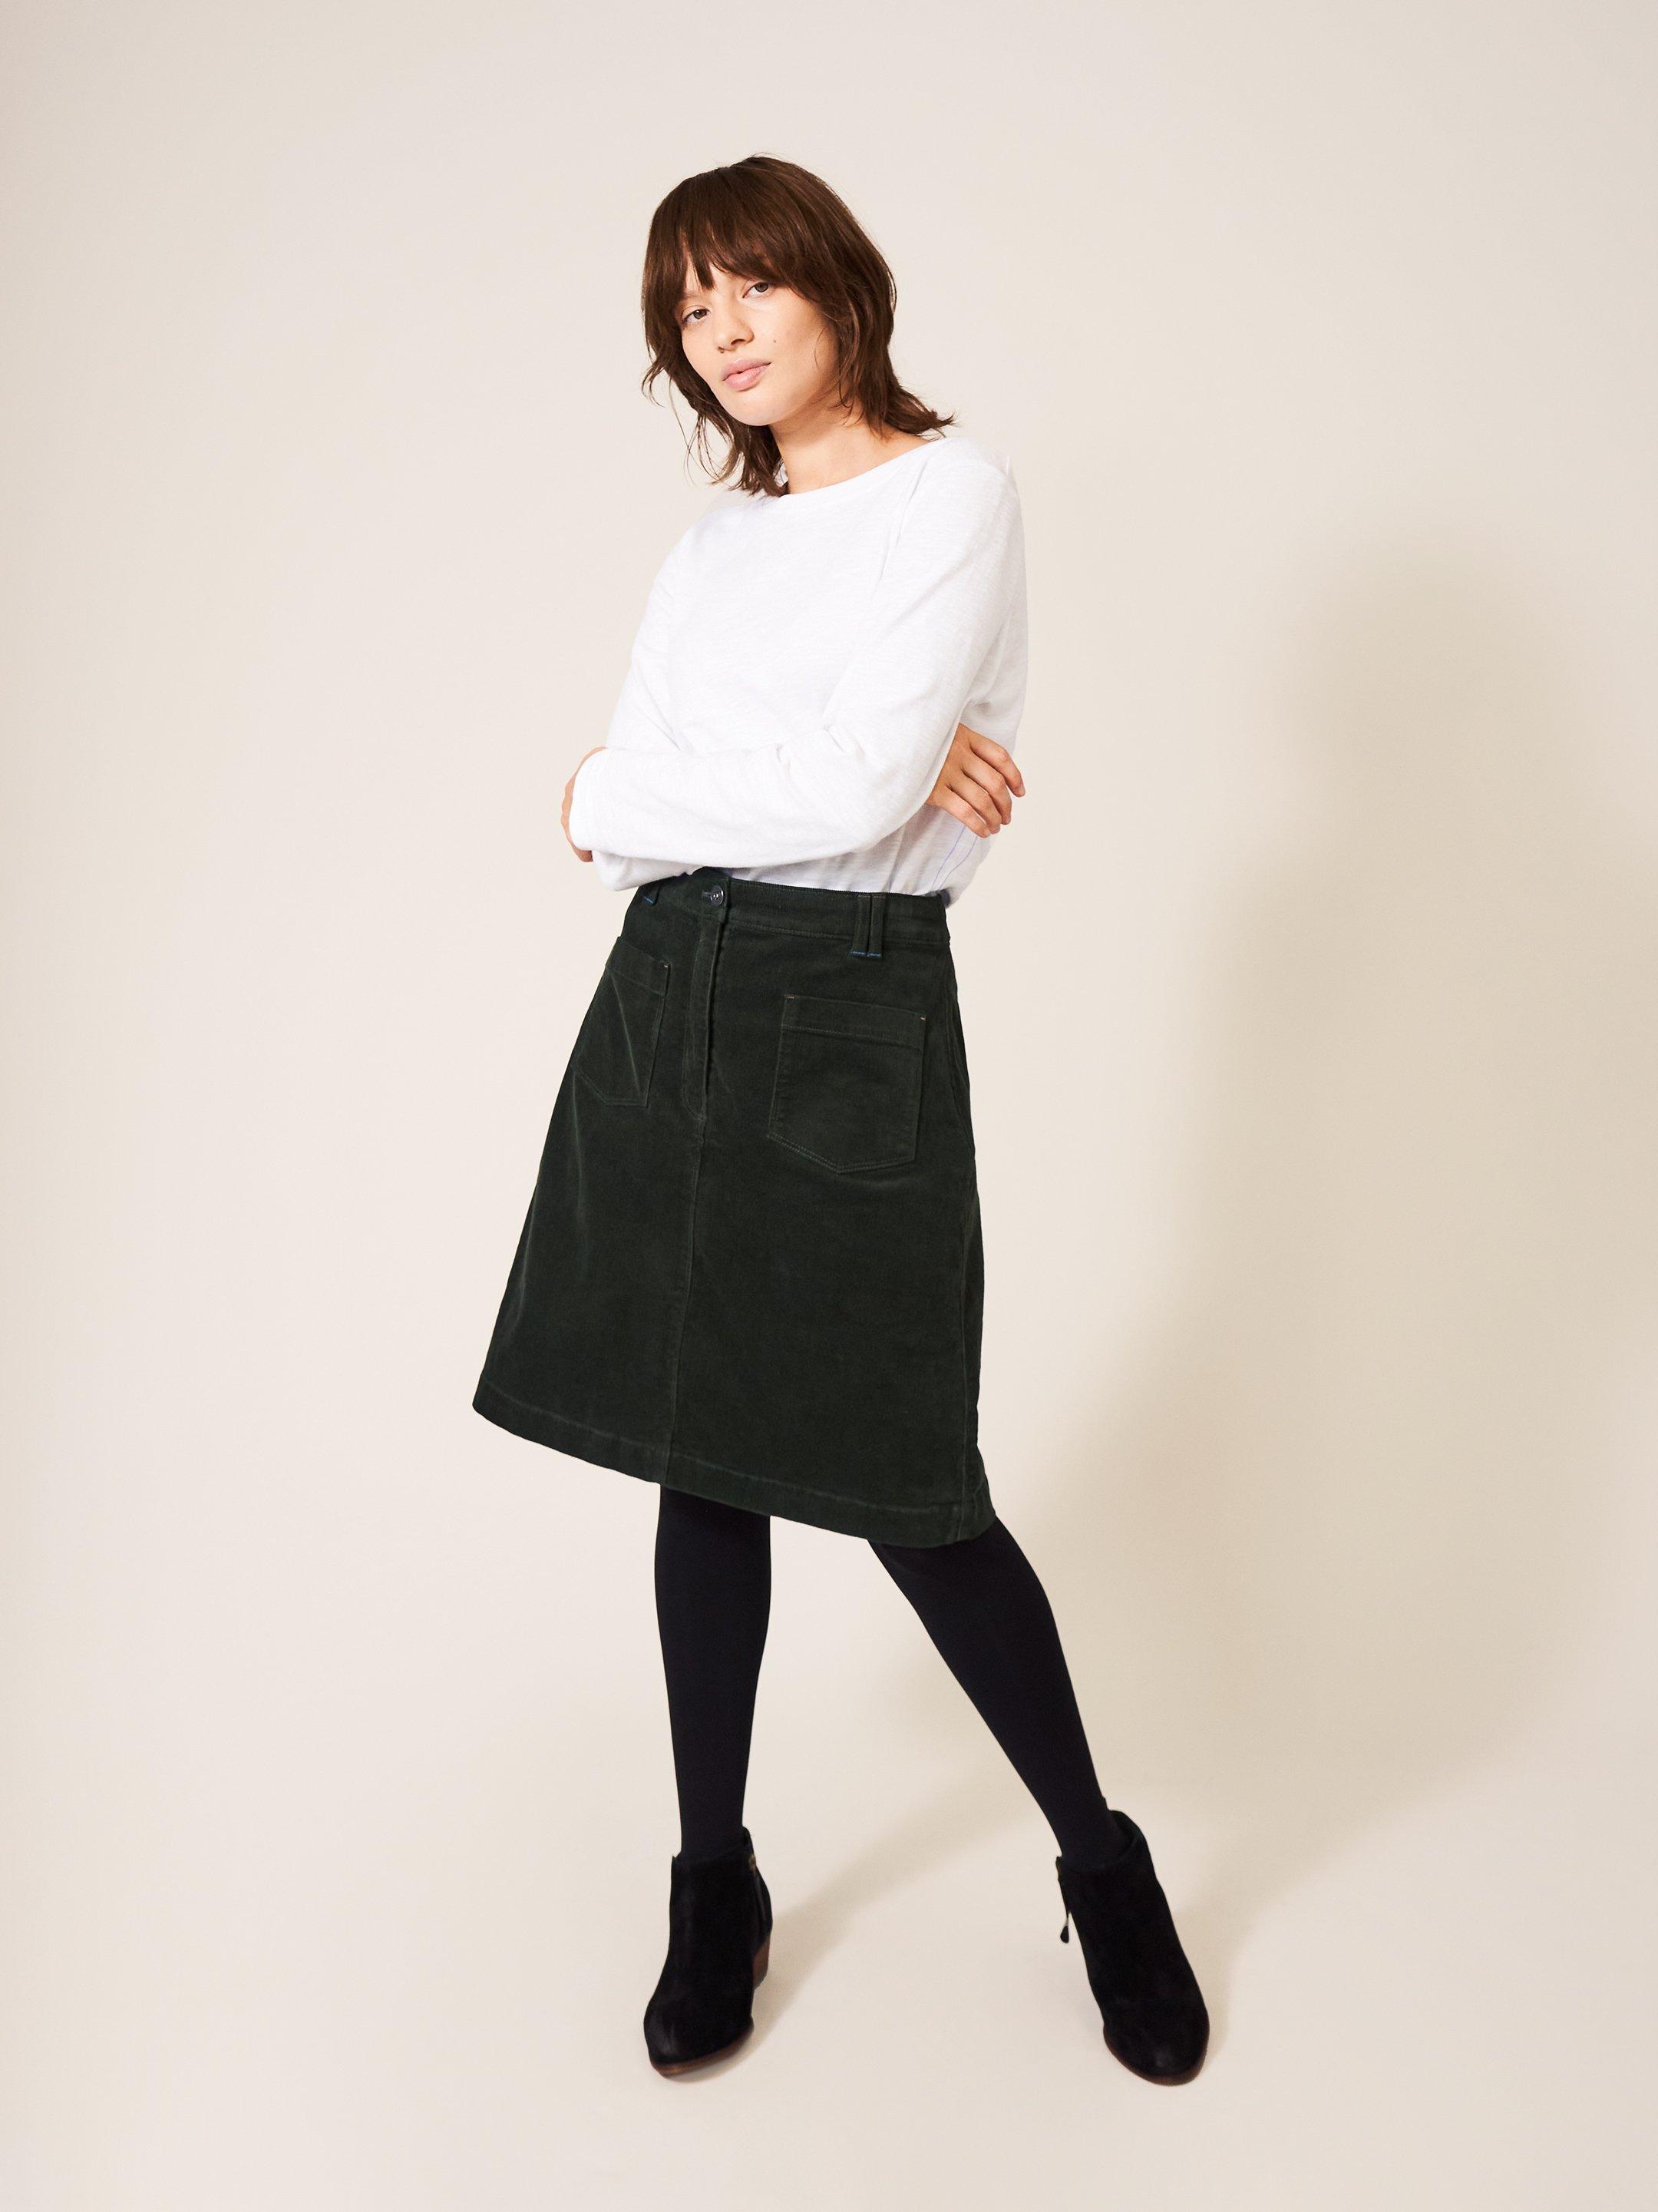 Melody Organic Cord Skirt in KHAKI GRN - MODEL DETAIL